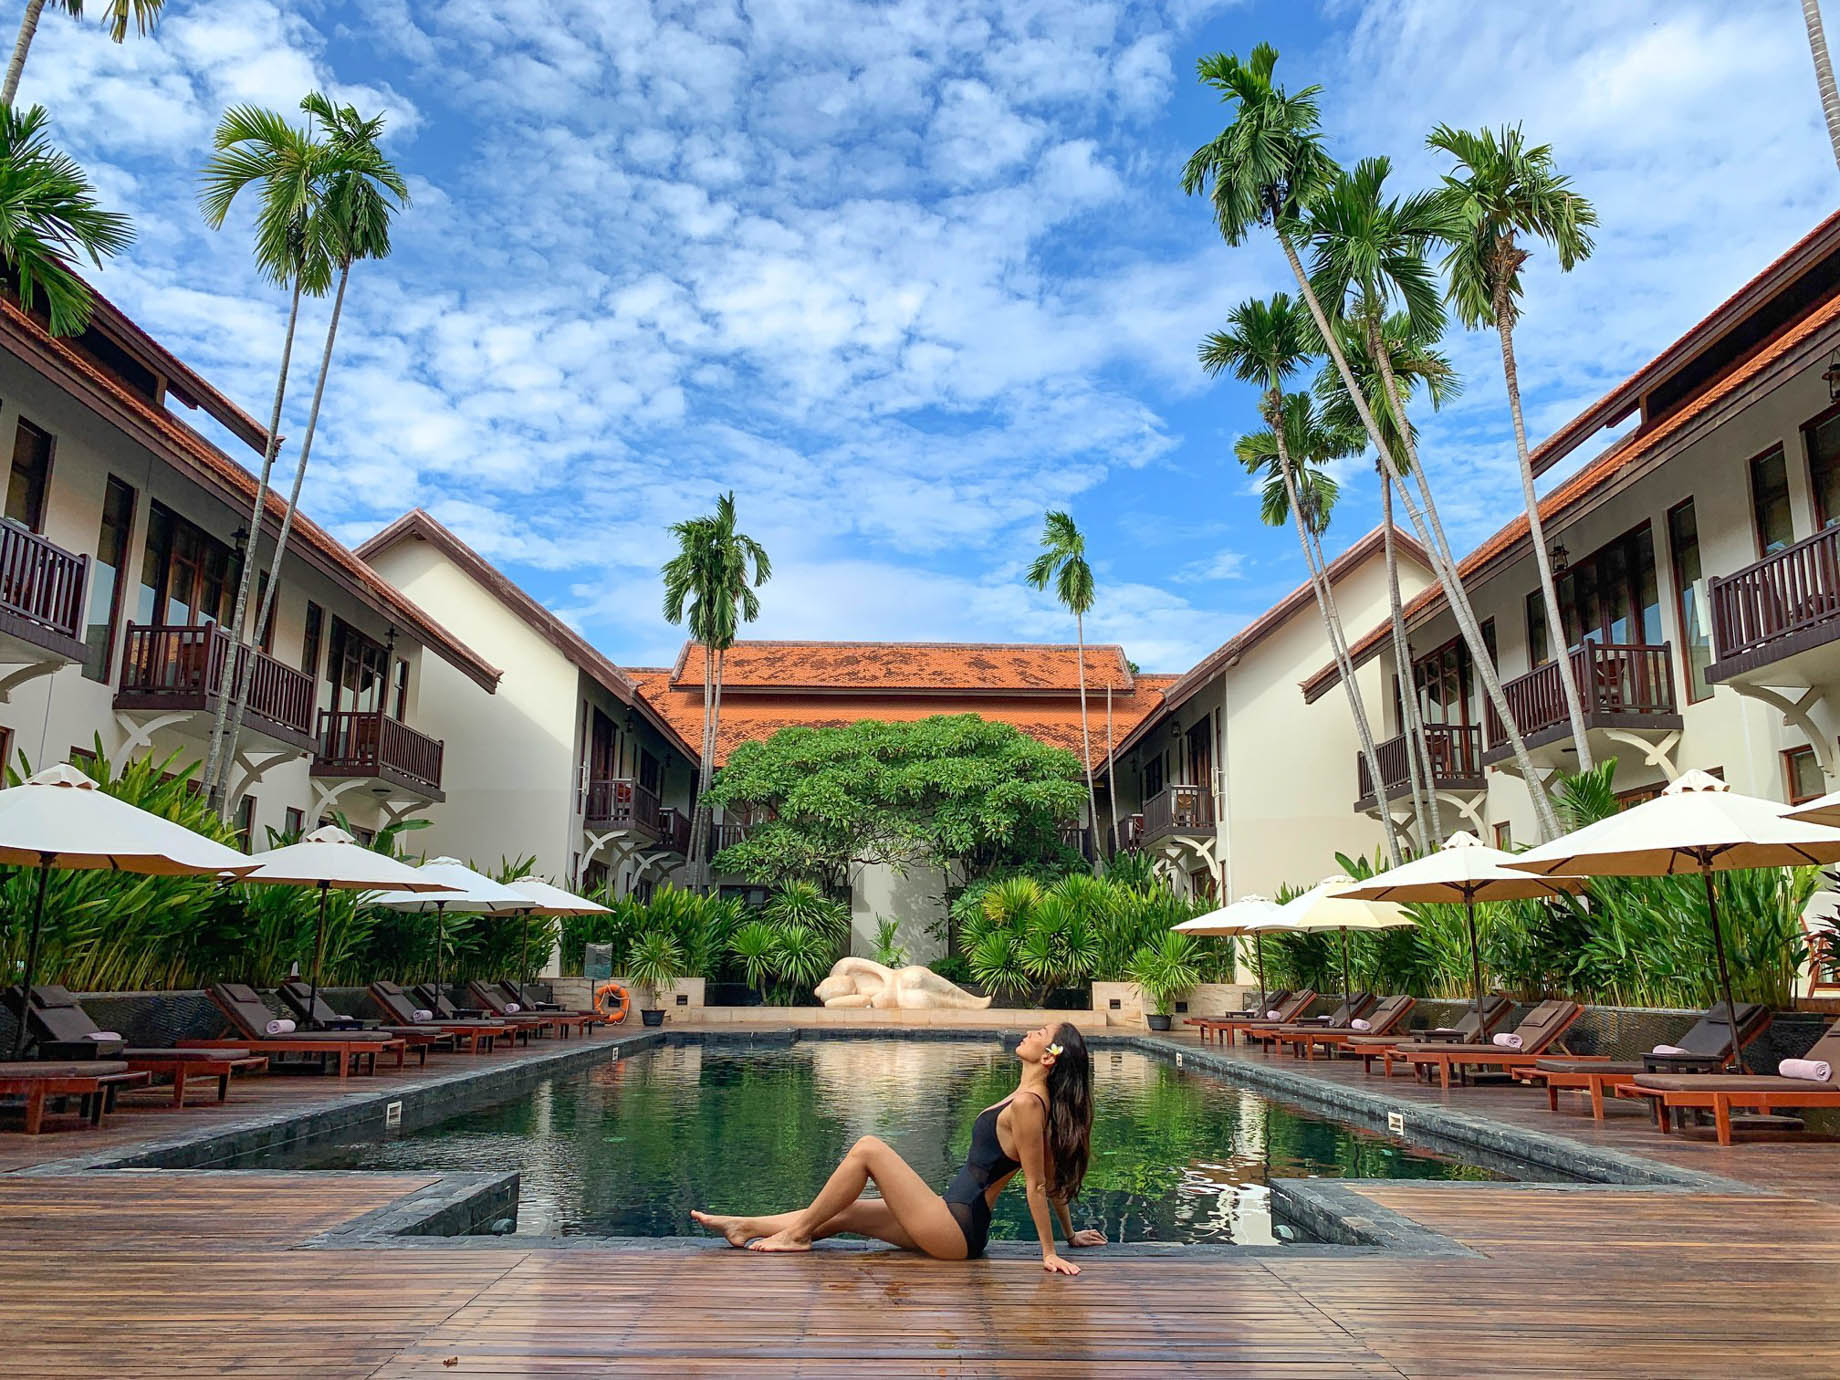 Anantara Angkor Resort - Siem Reap, Cambodia - Pool